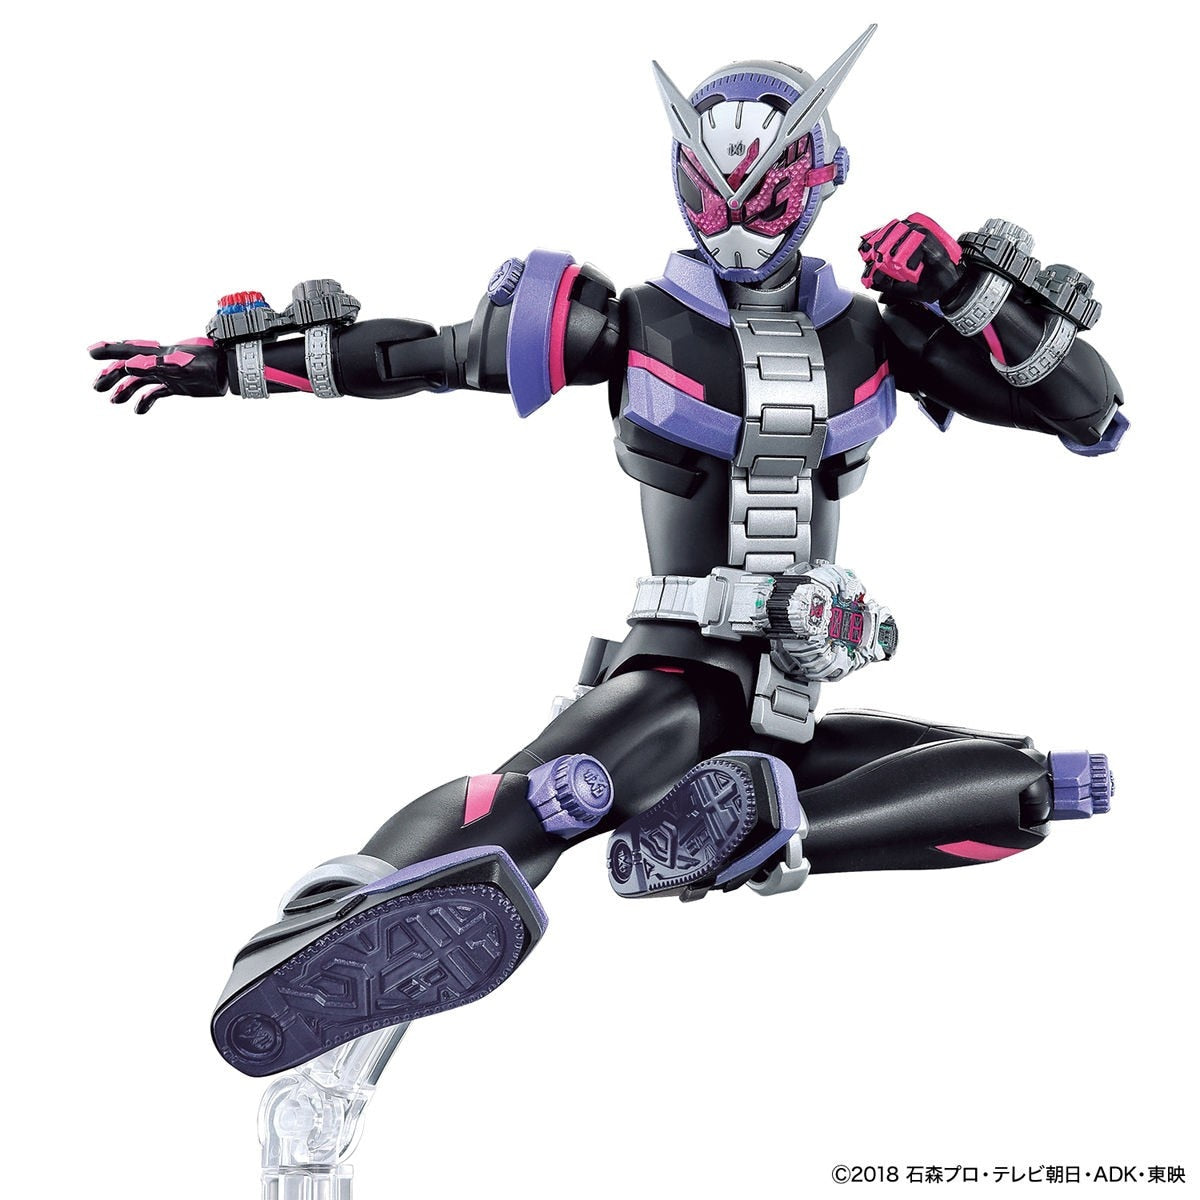 Kamen Rider Figure rise Standard Bandai ZI-O Assembly model Anime Figure Toy Gift Original Product [In Stock], everythinganimee